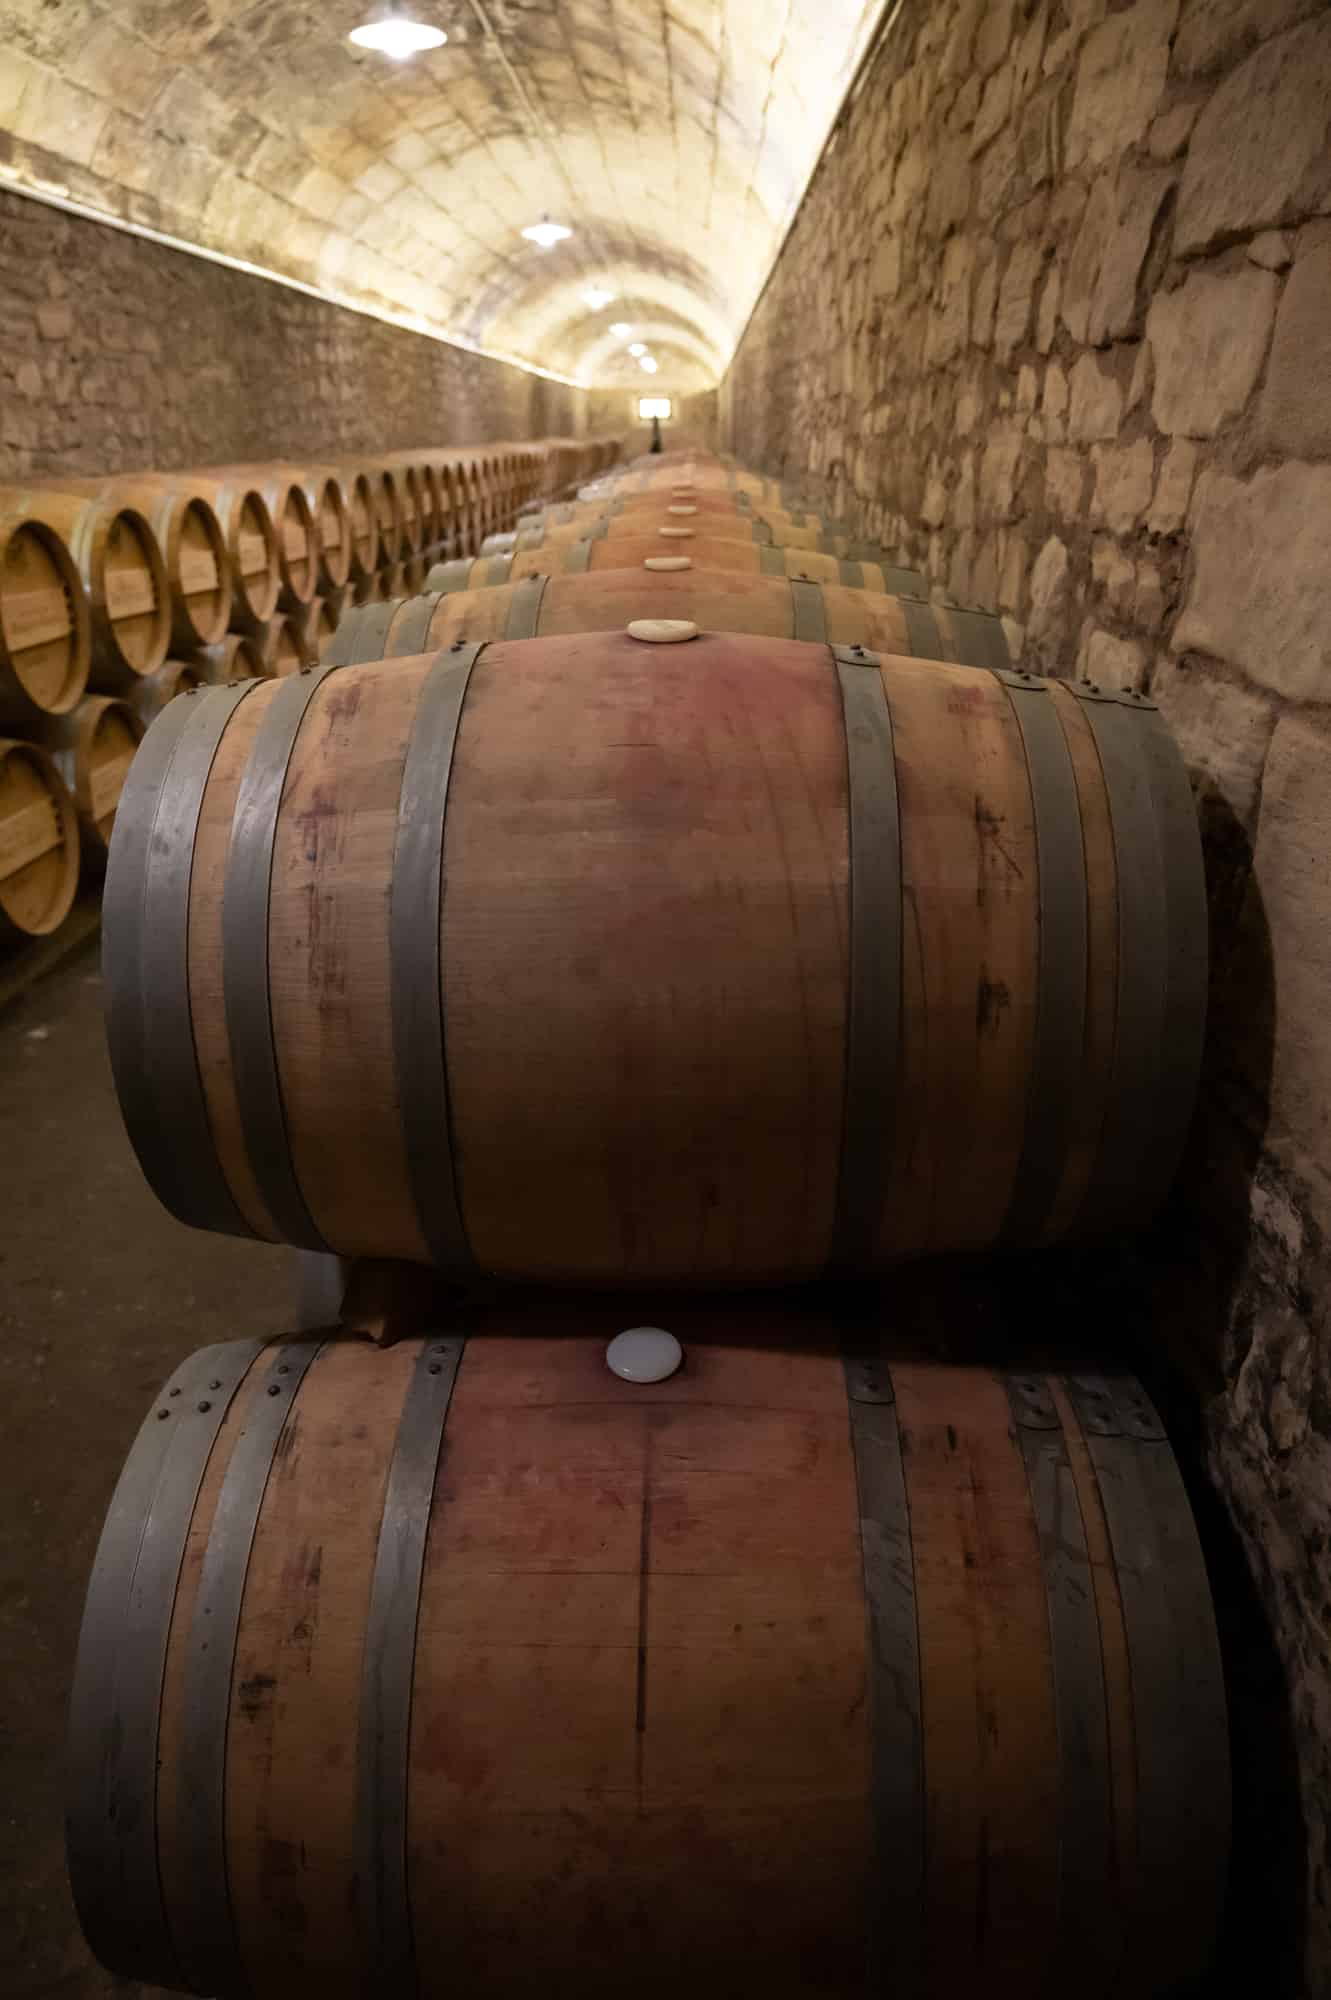 Old french oak wooden barrels in underground cellars for wine aging process, wine making in La Rioja region, Spain